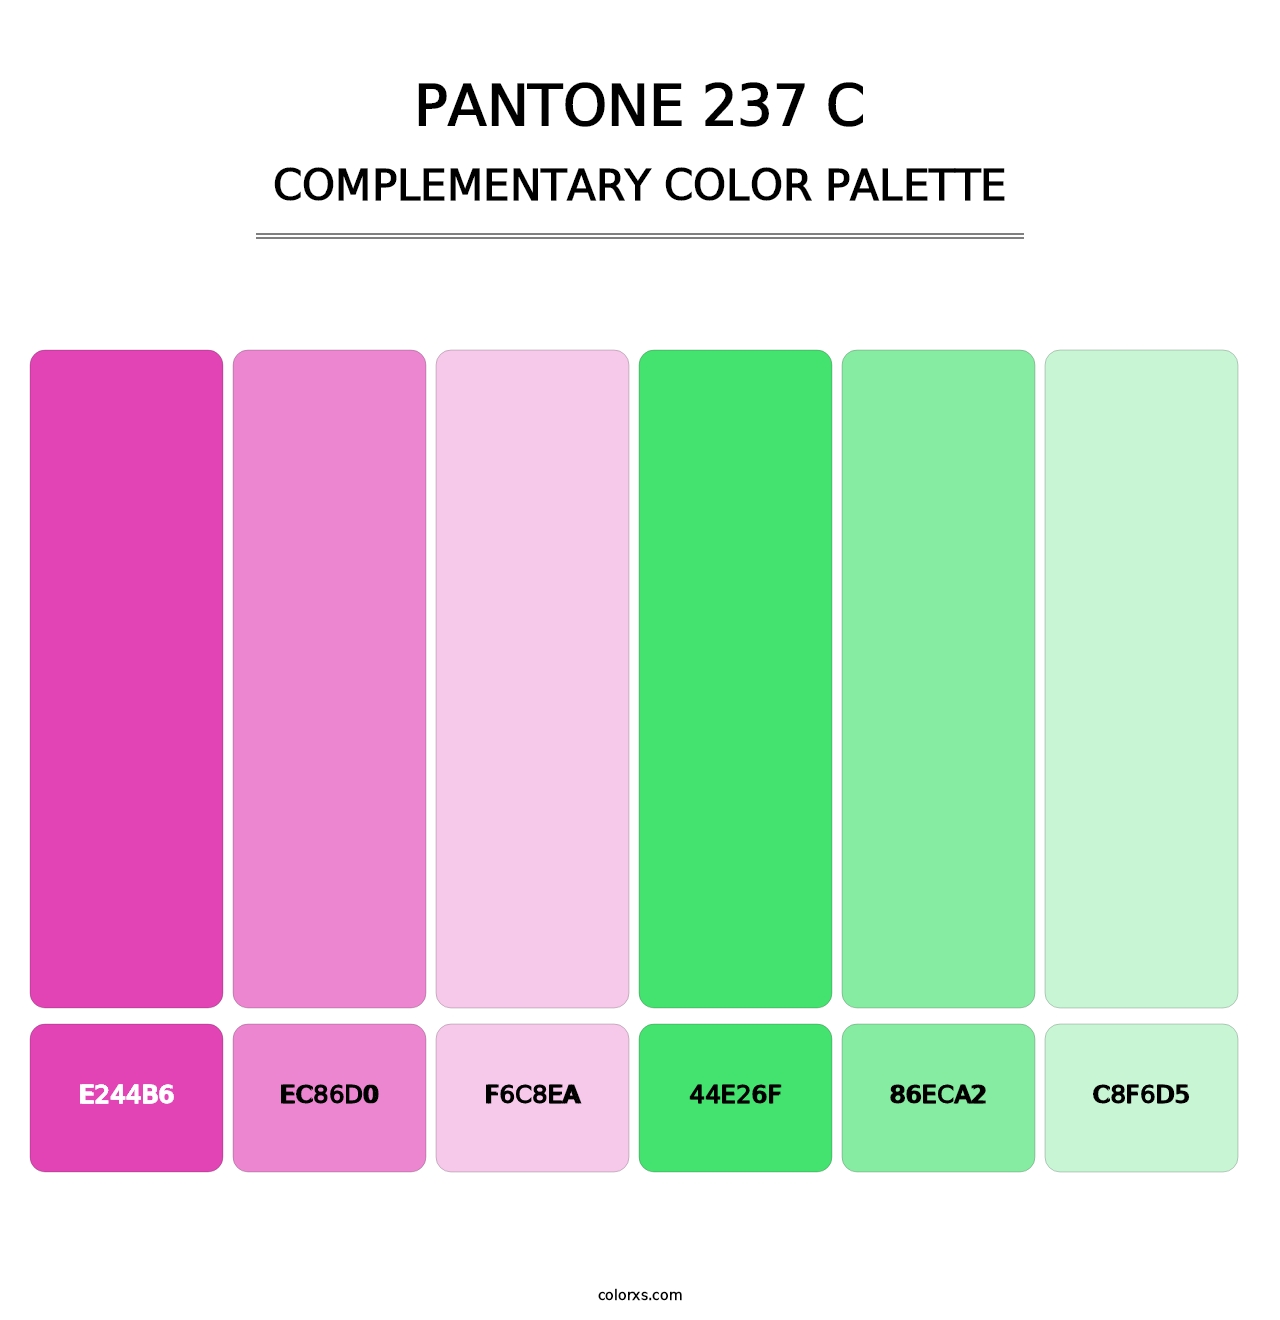 PANTONE 237 C - Complementary Color Palette